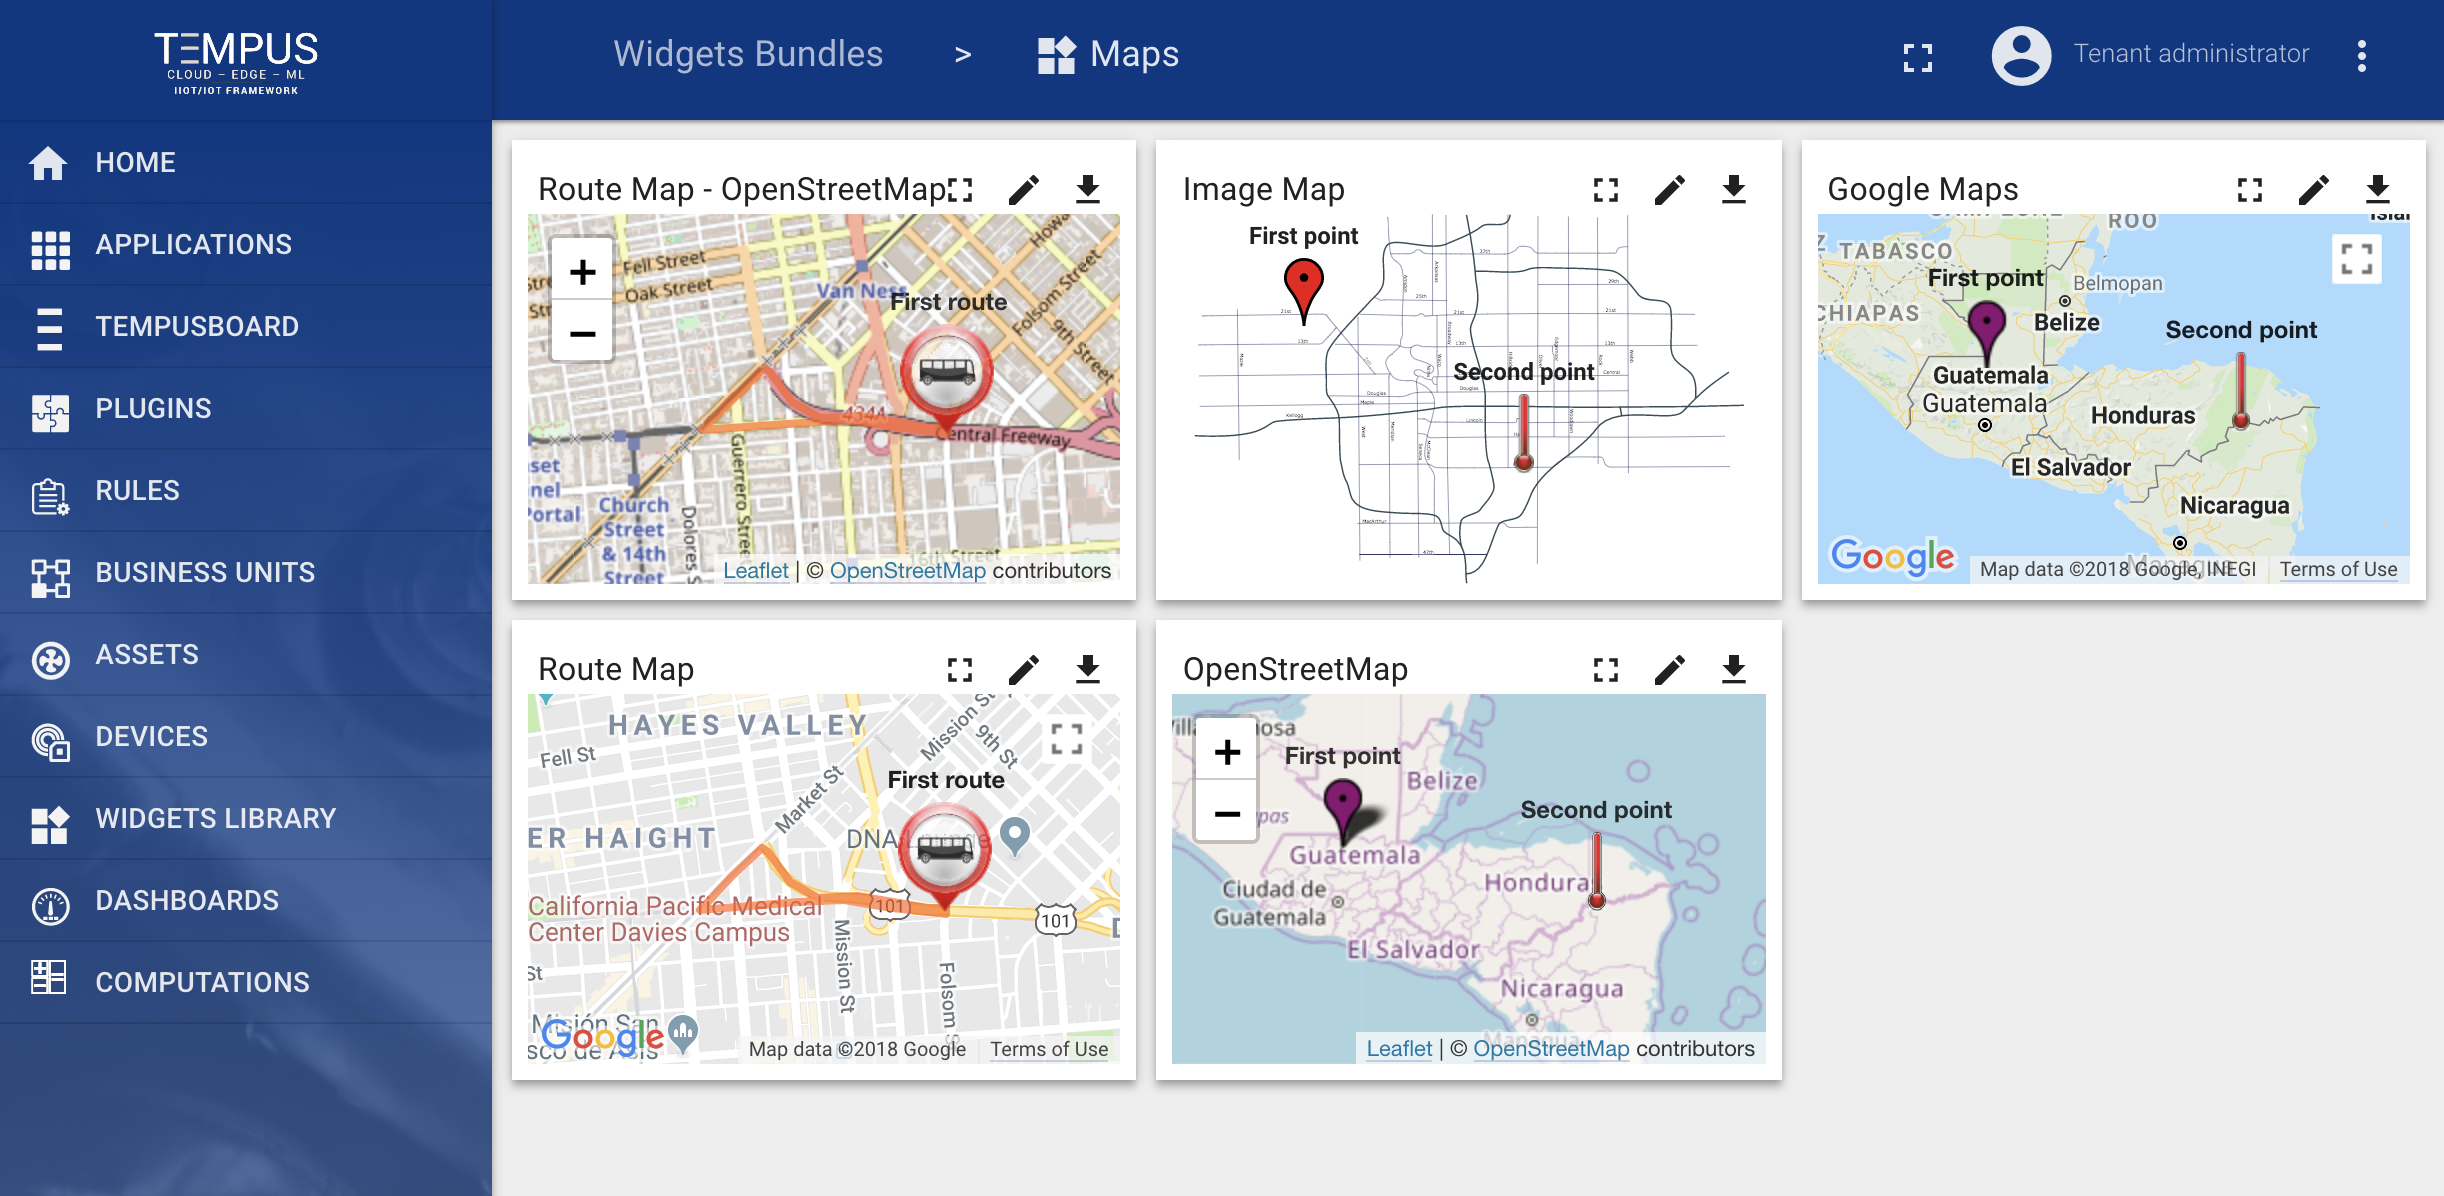 Maps widgets